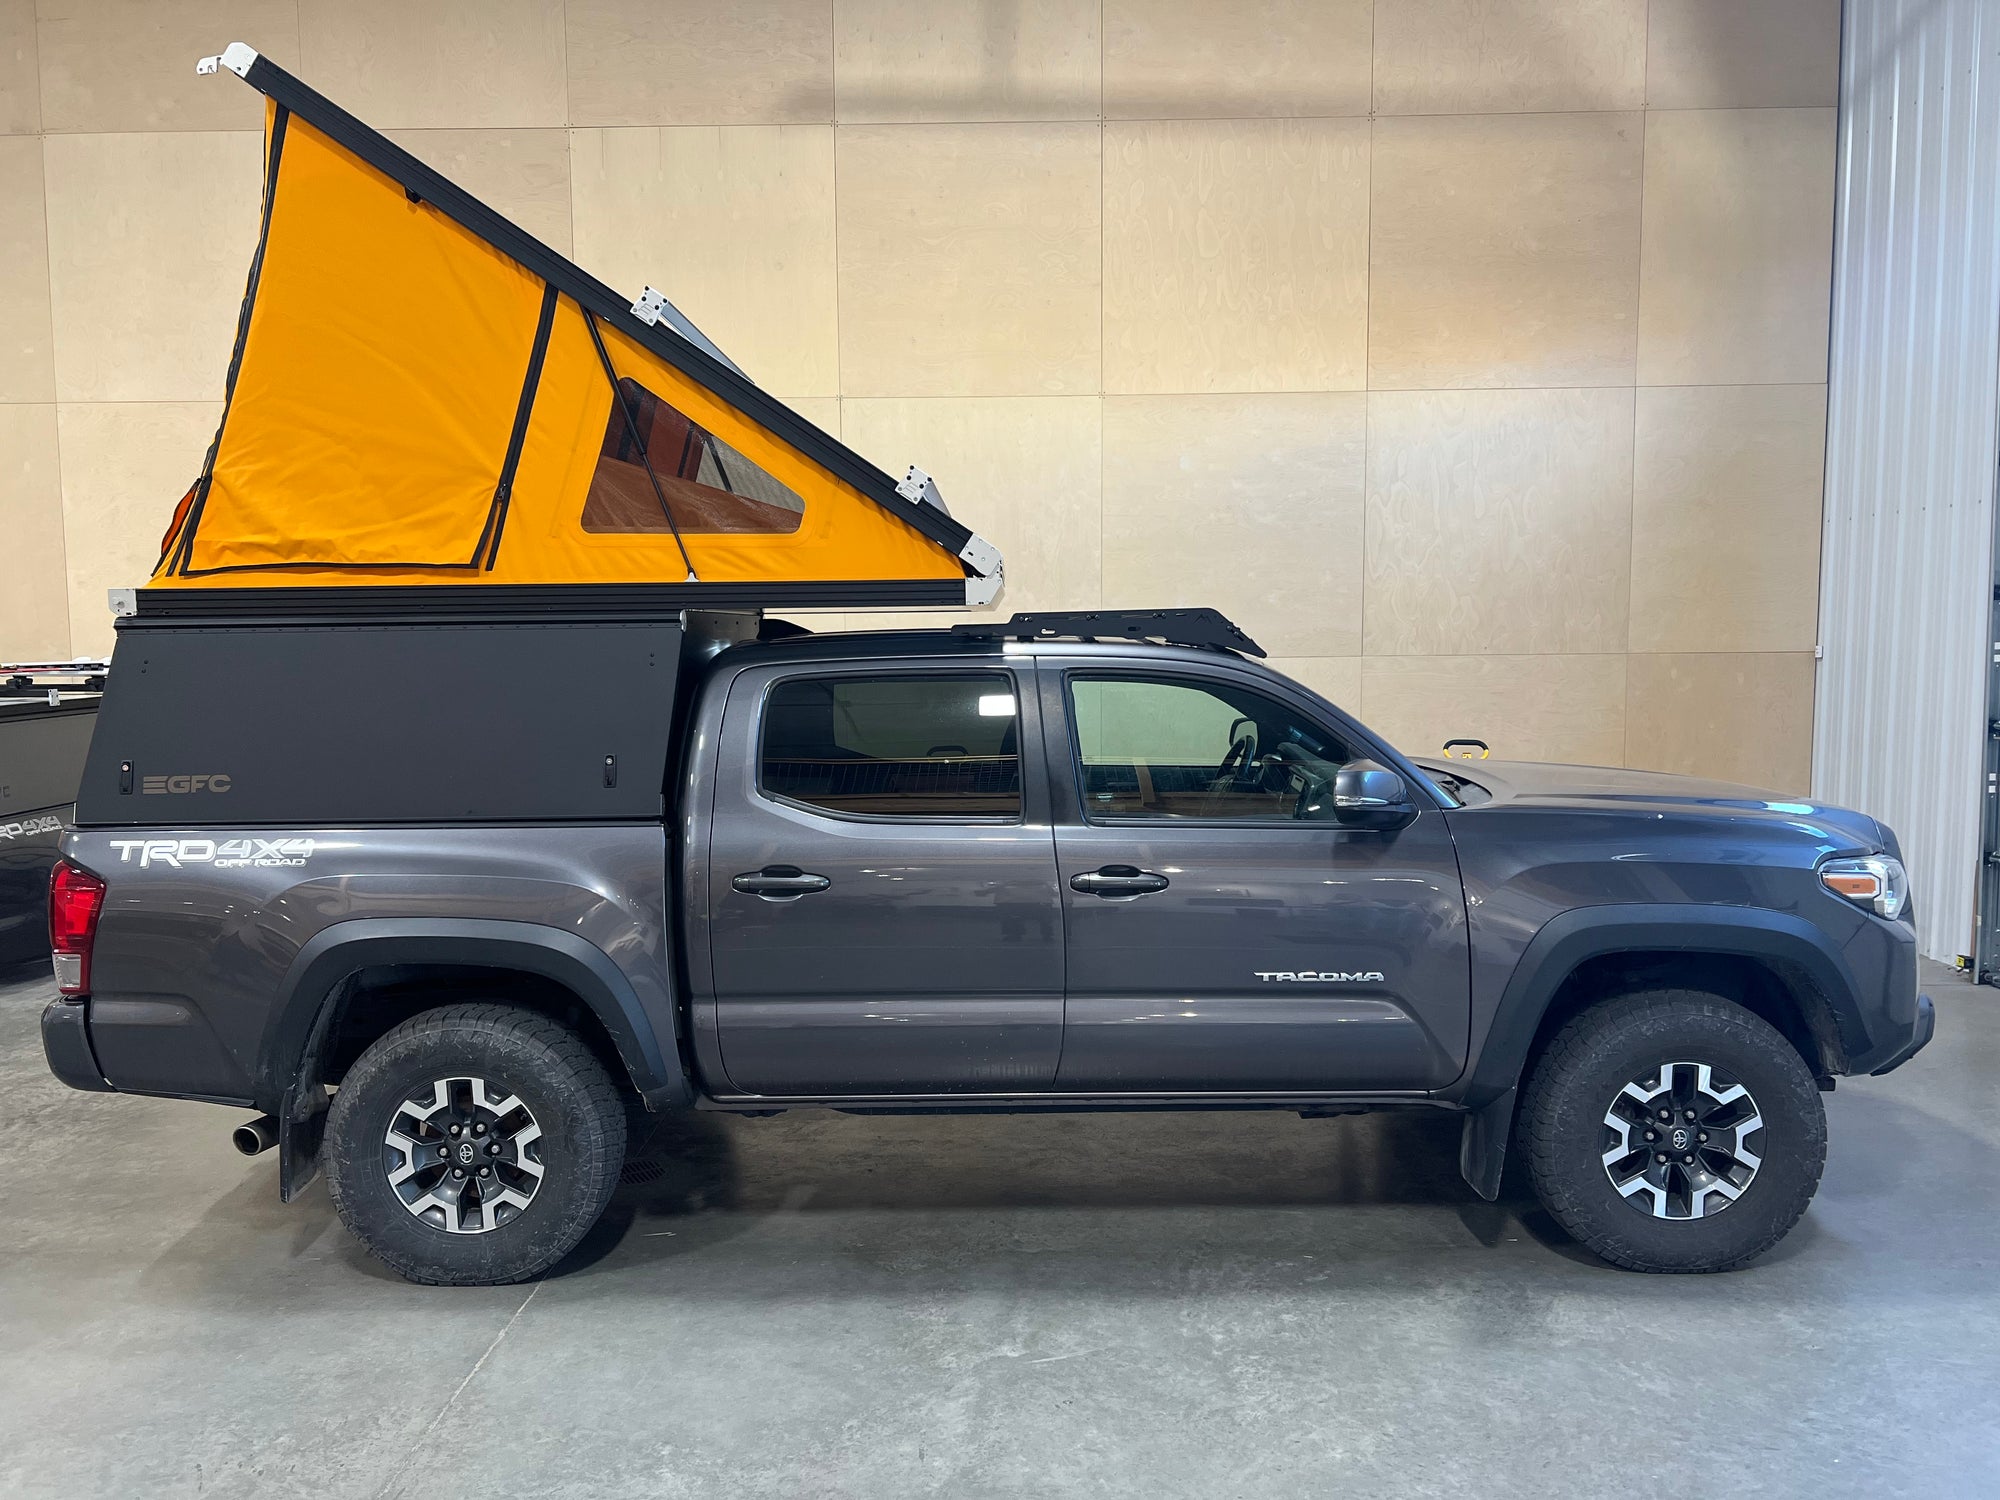 2021 Toyota Tacoma Camper - Build #5249